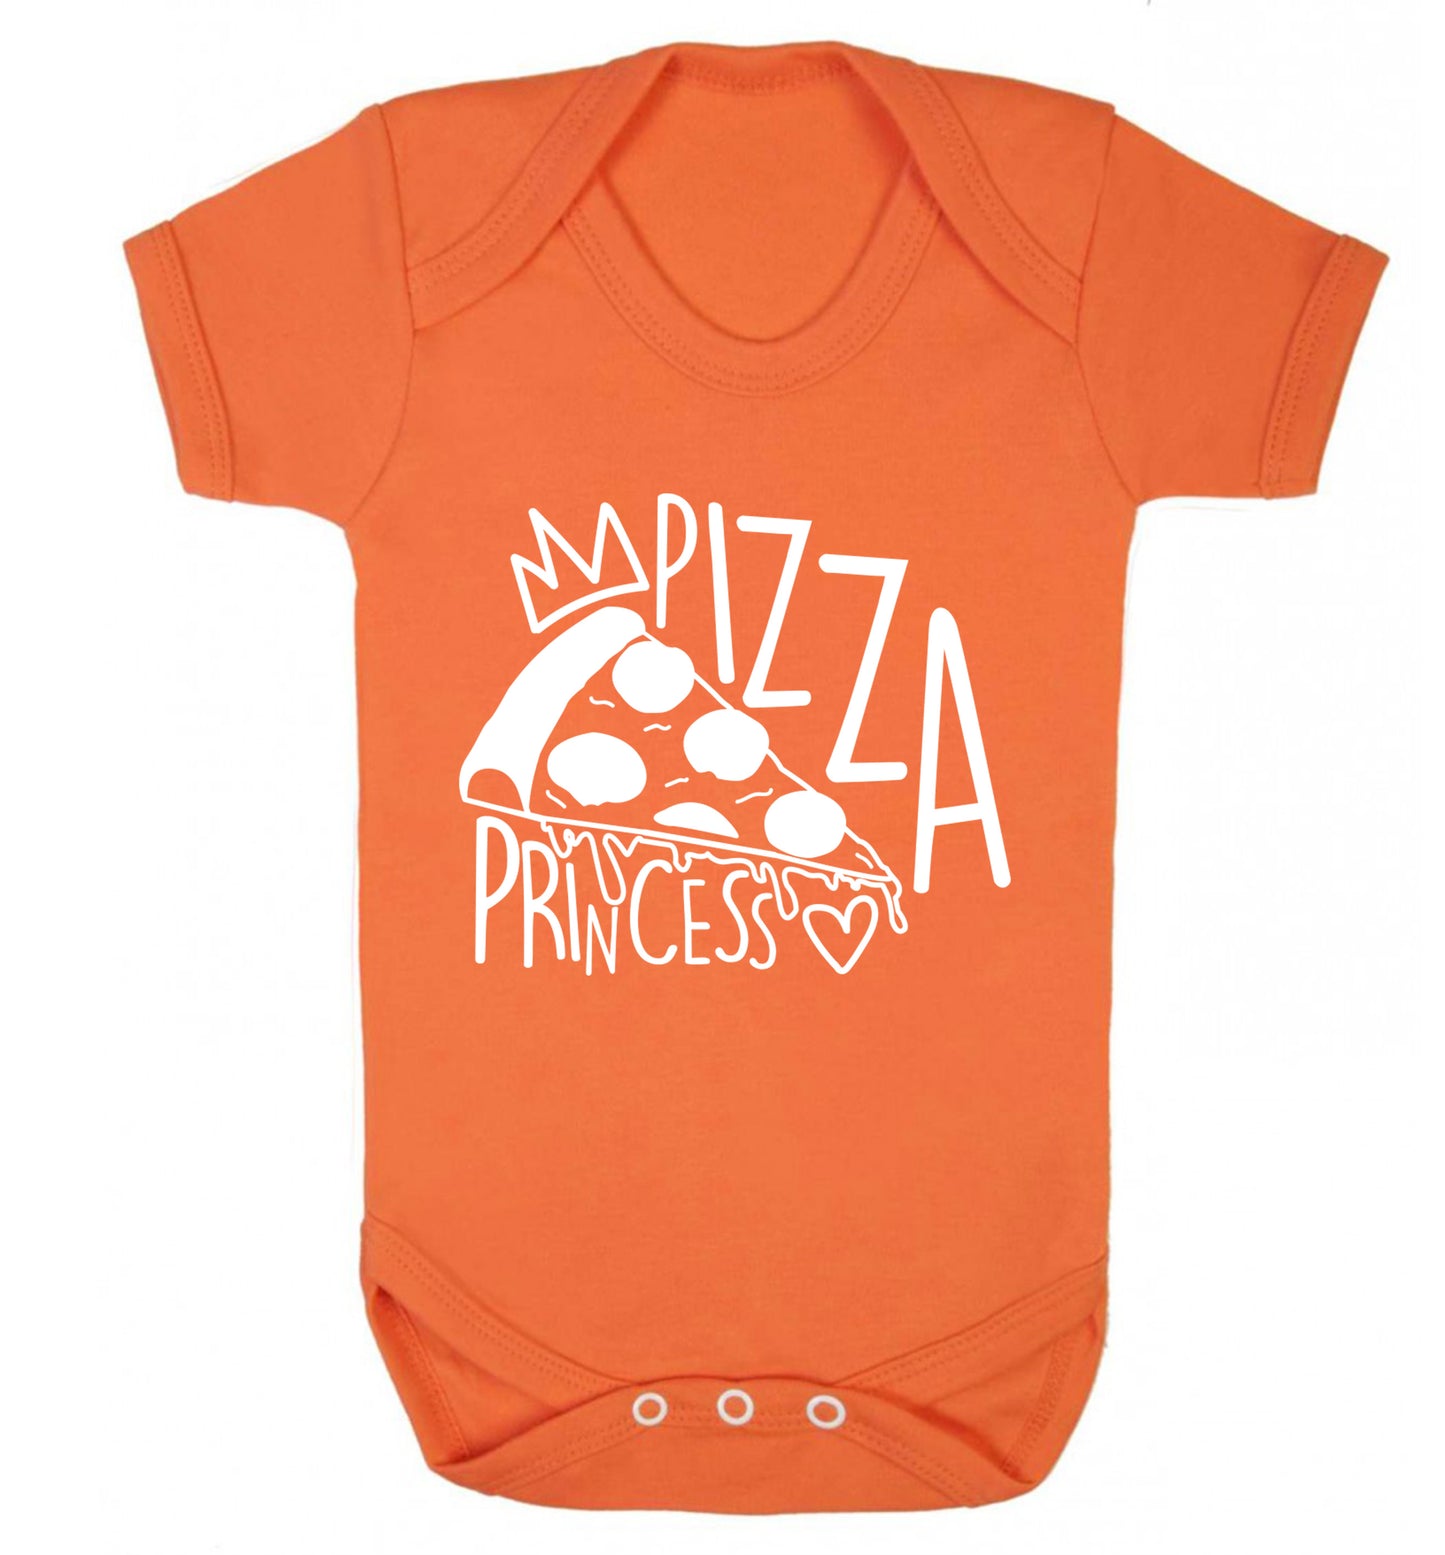 Pizza Princess Baby Vest orange 18-24 months